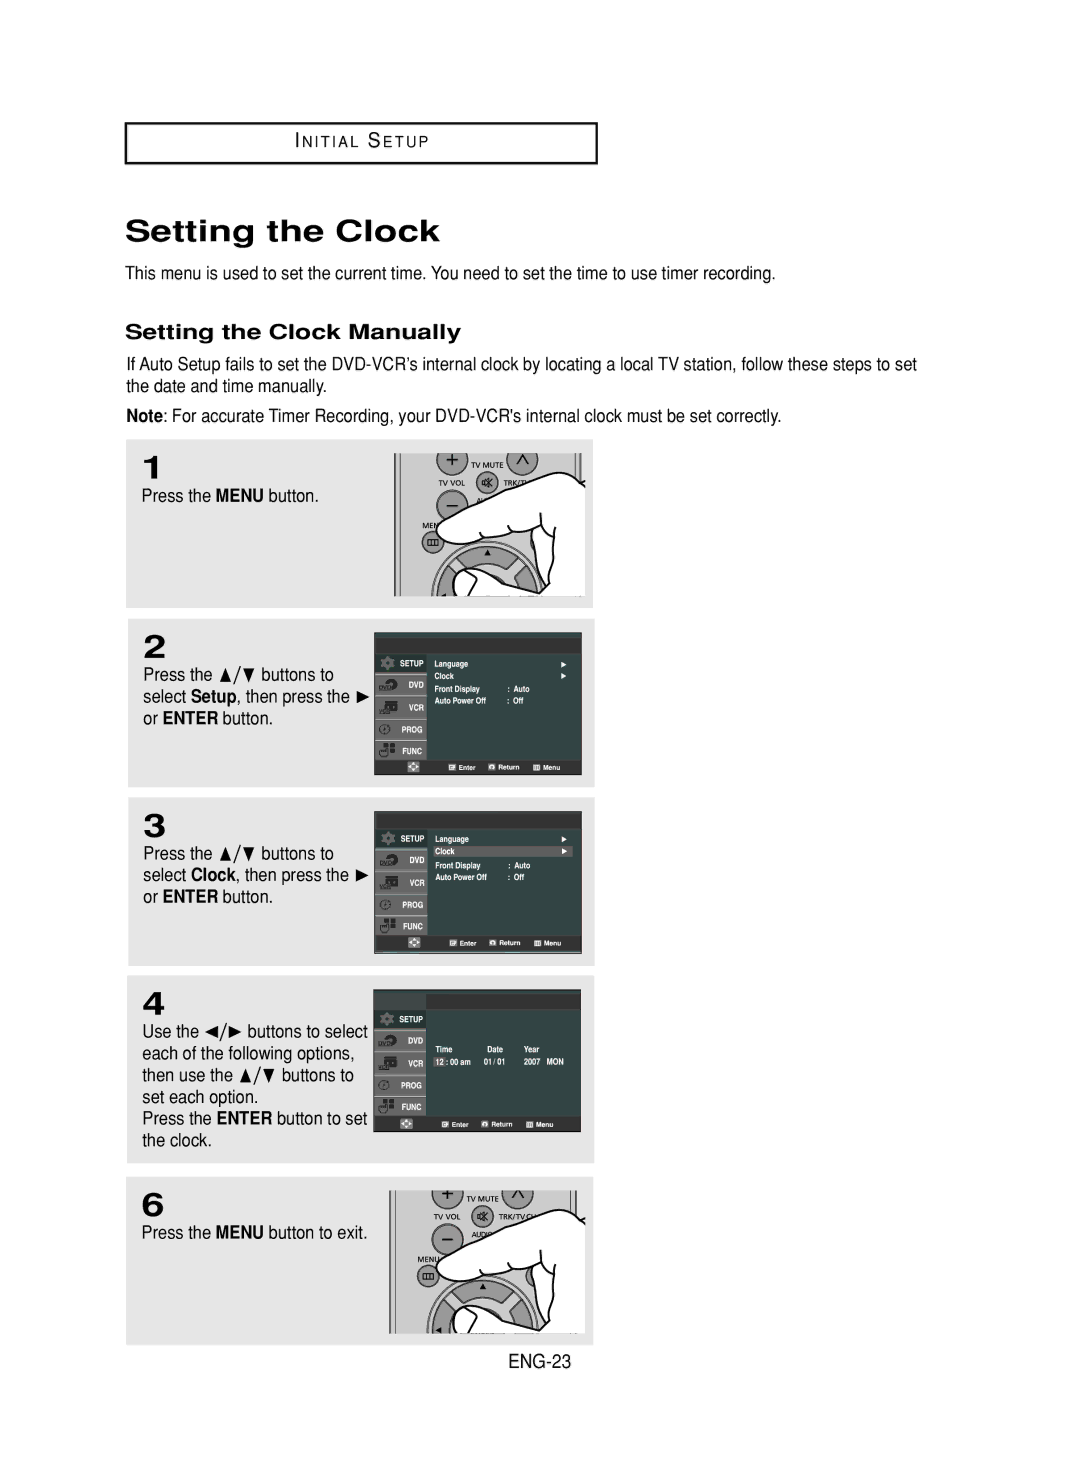 Samsung DVD-V9800 instruction manual Setting the Clock Manually, ENG-23 